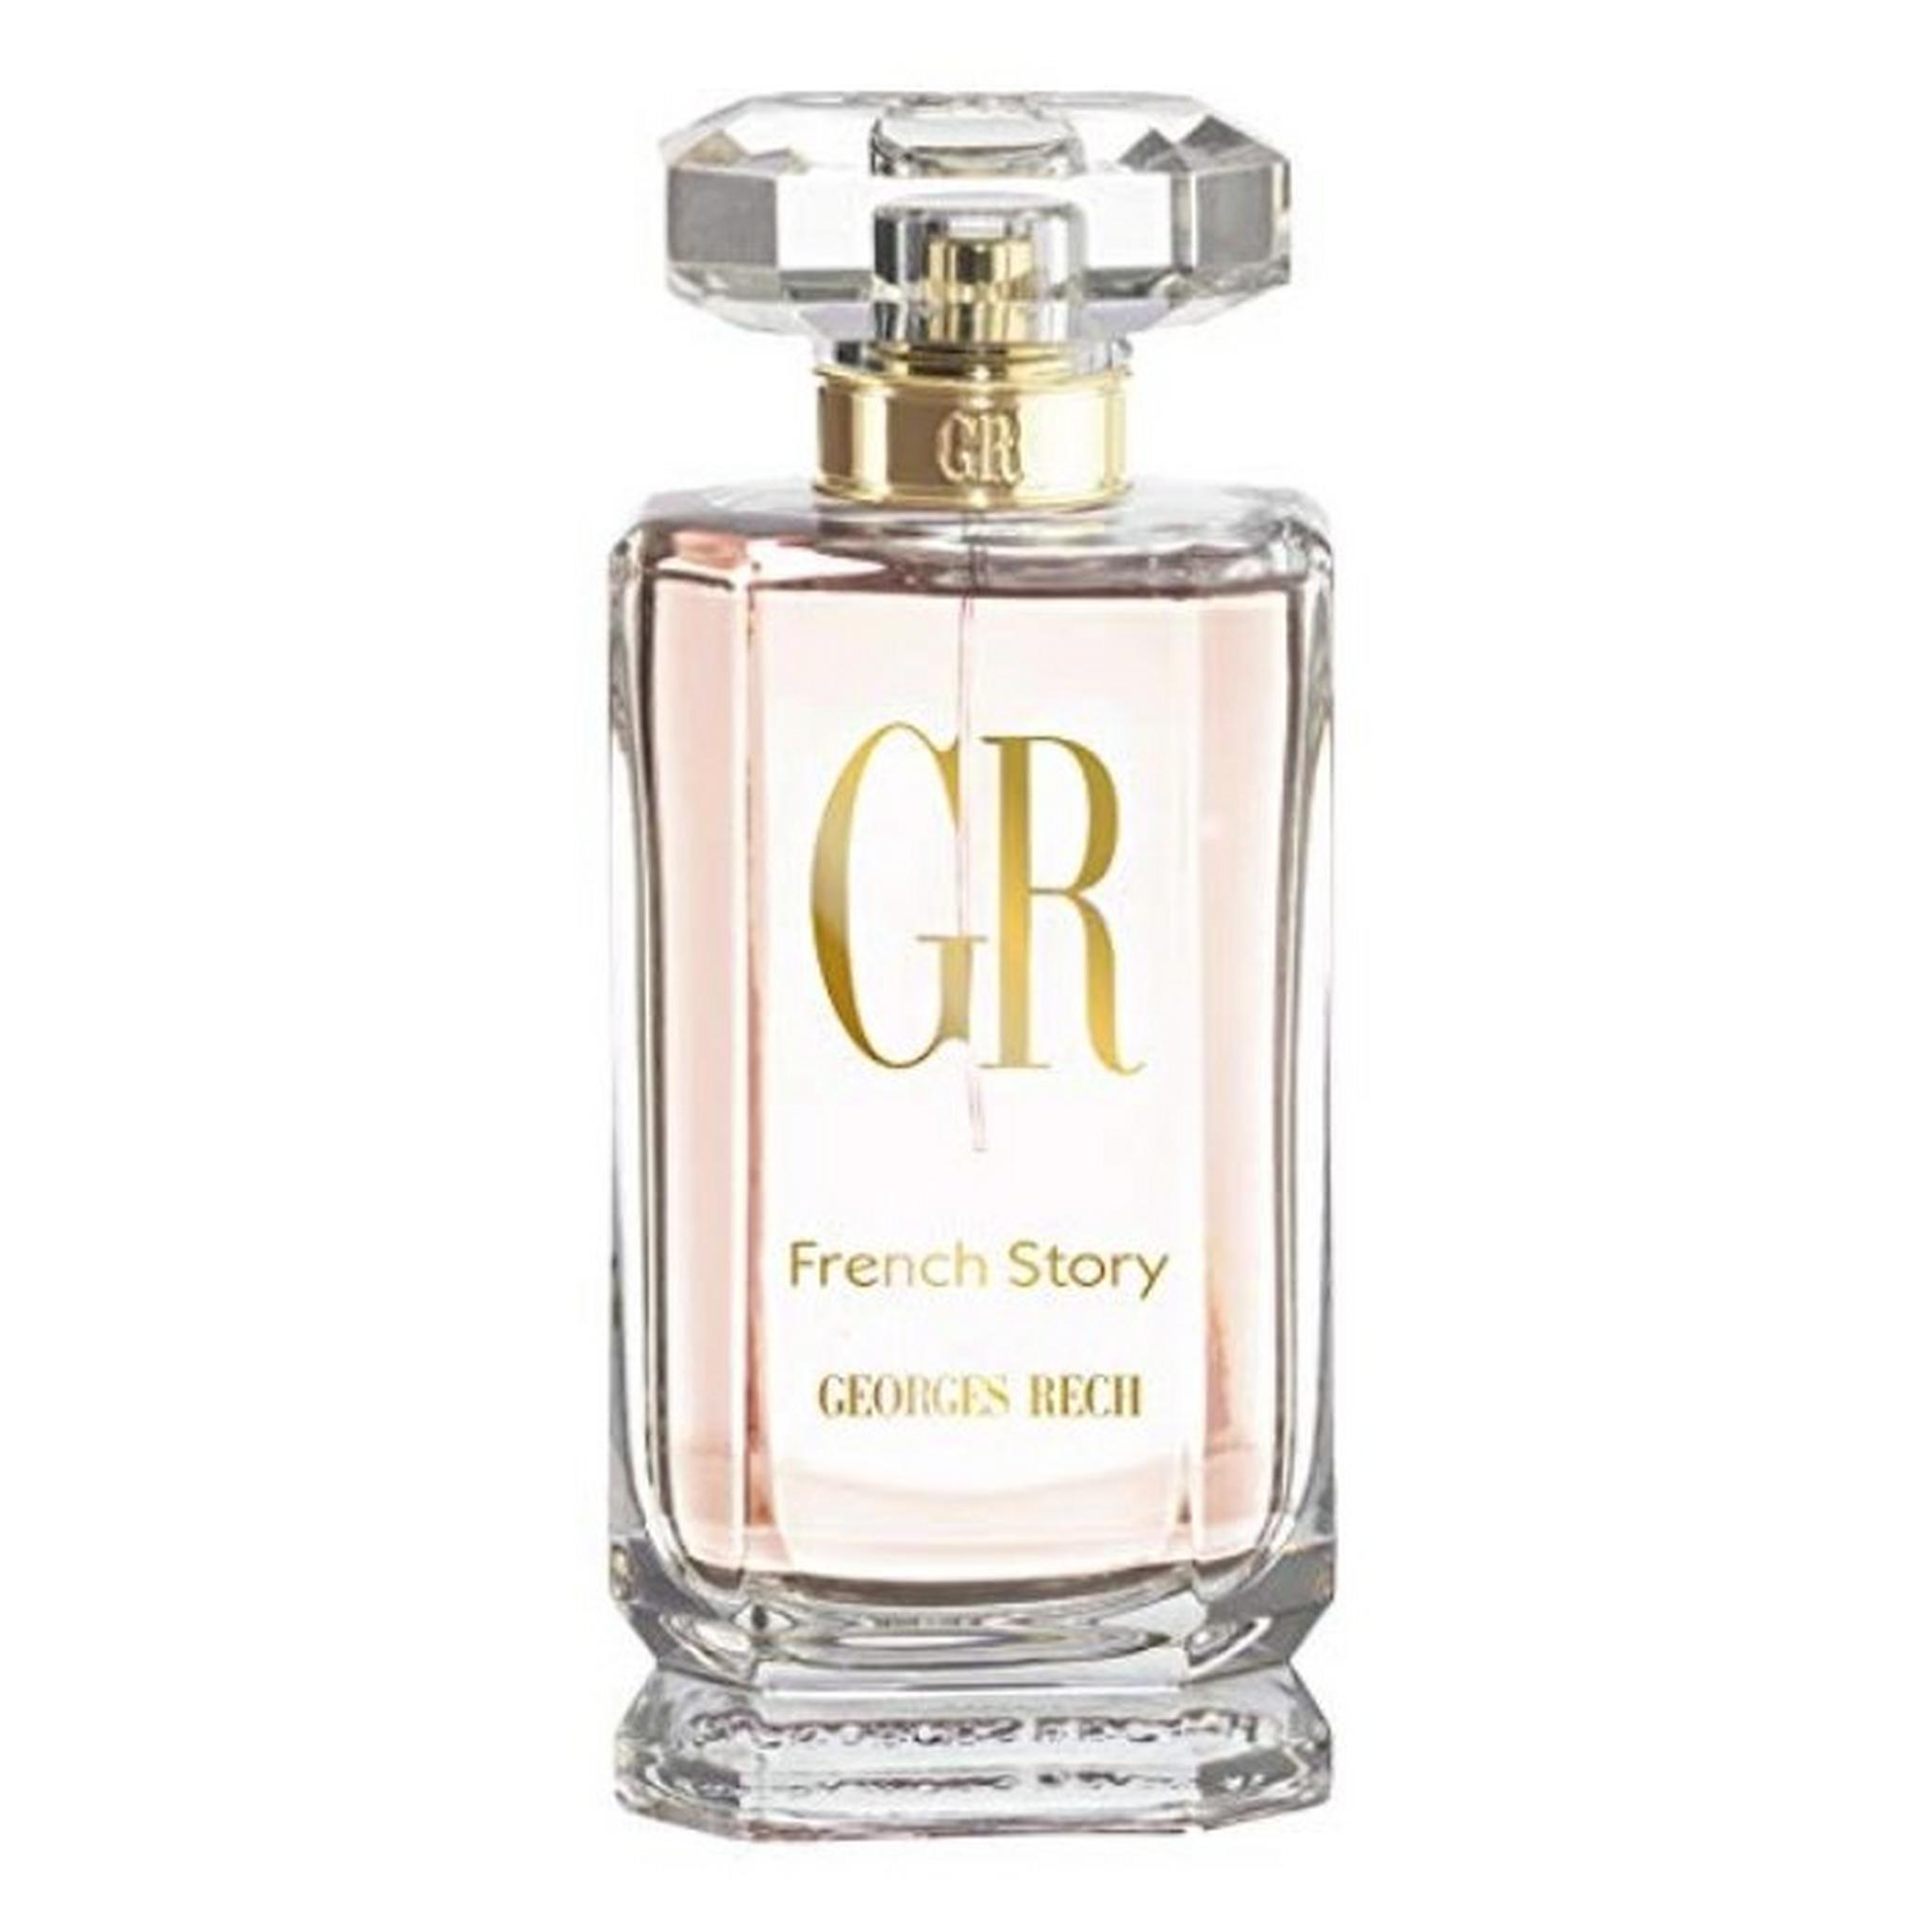 George Rech French Story for Women Eau de Parfum 100ml